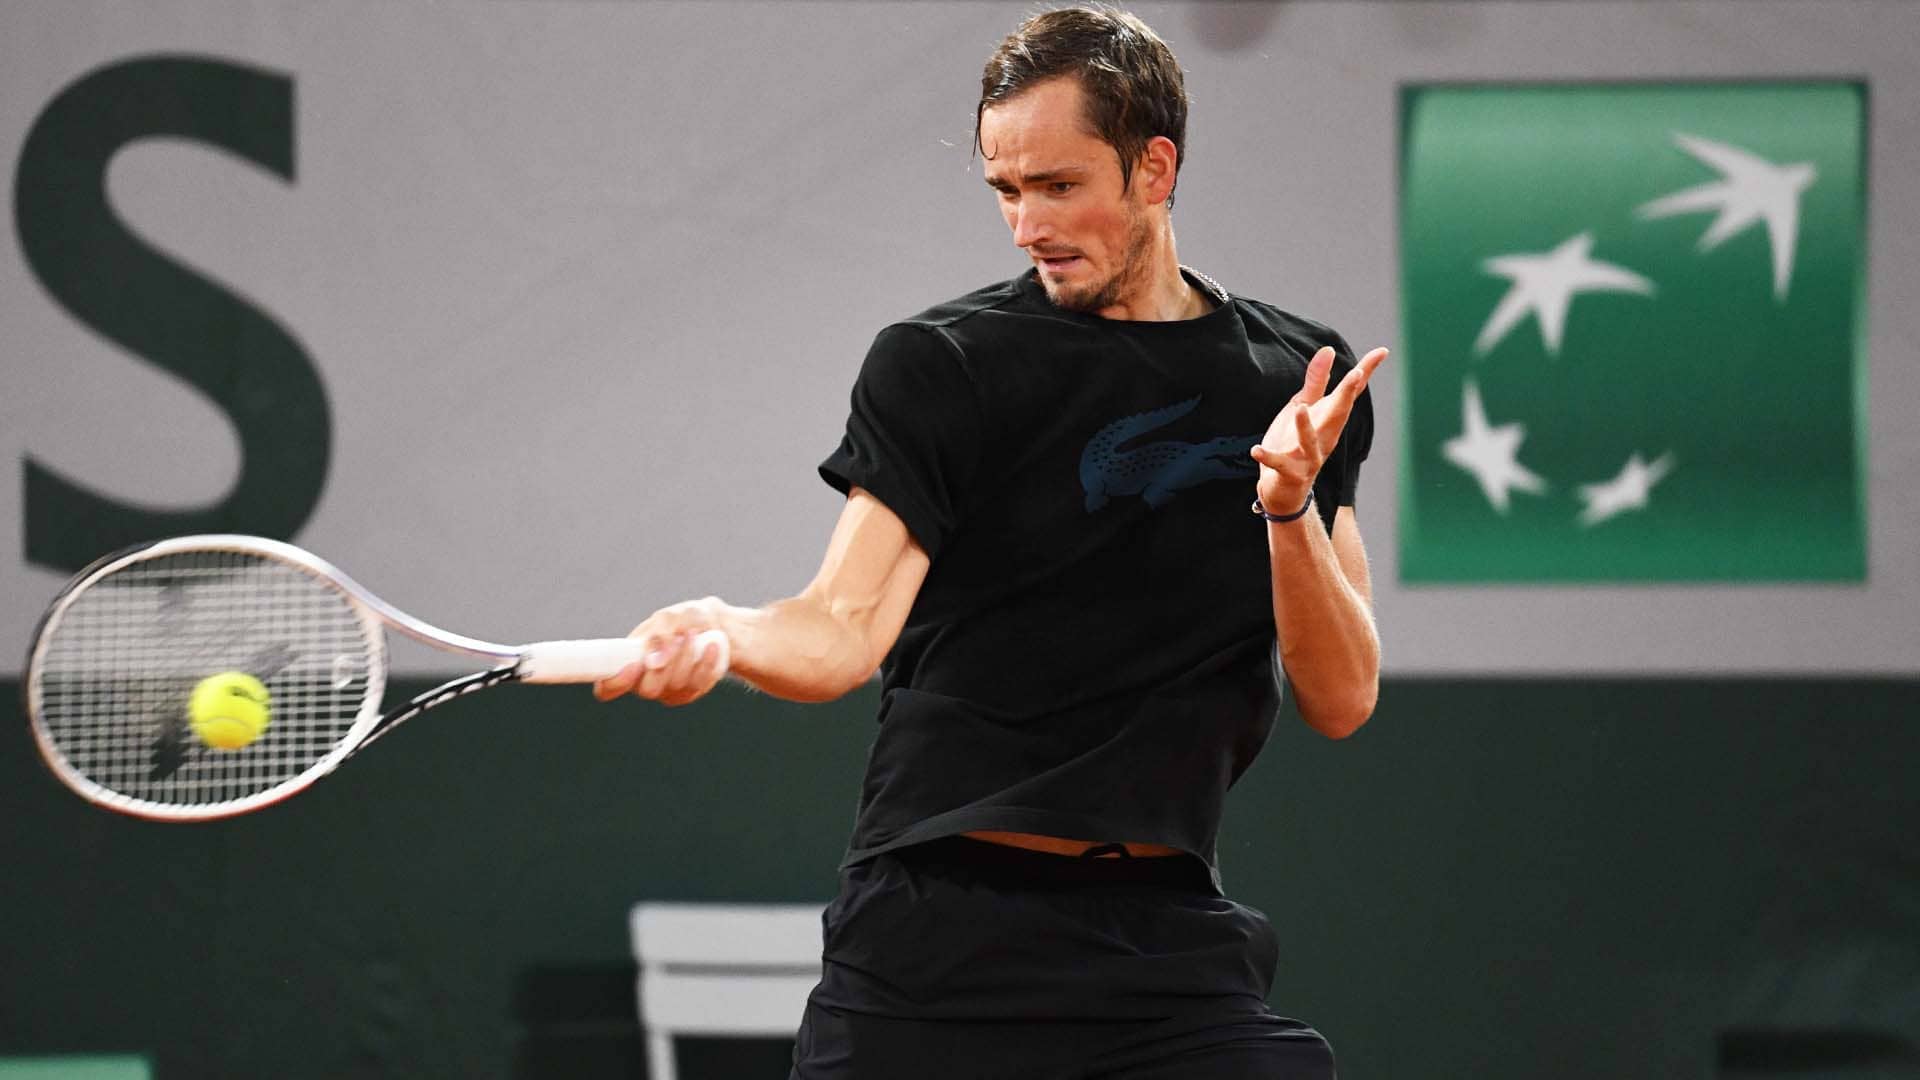 Daniil Medvedev will face Marton Fucsovics in the first round at Roland Garros.